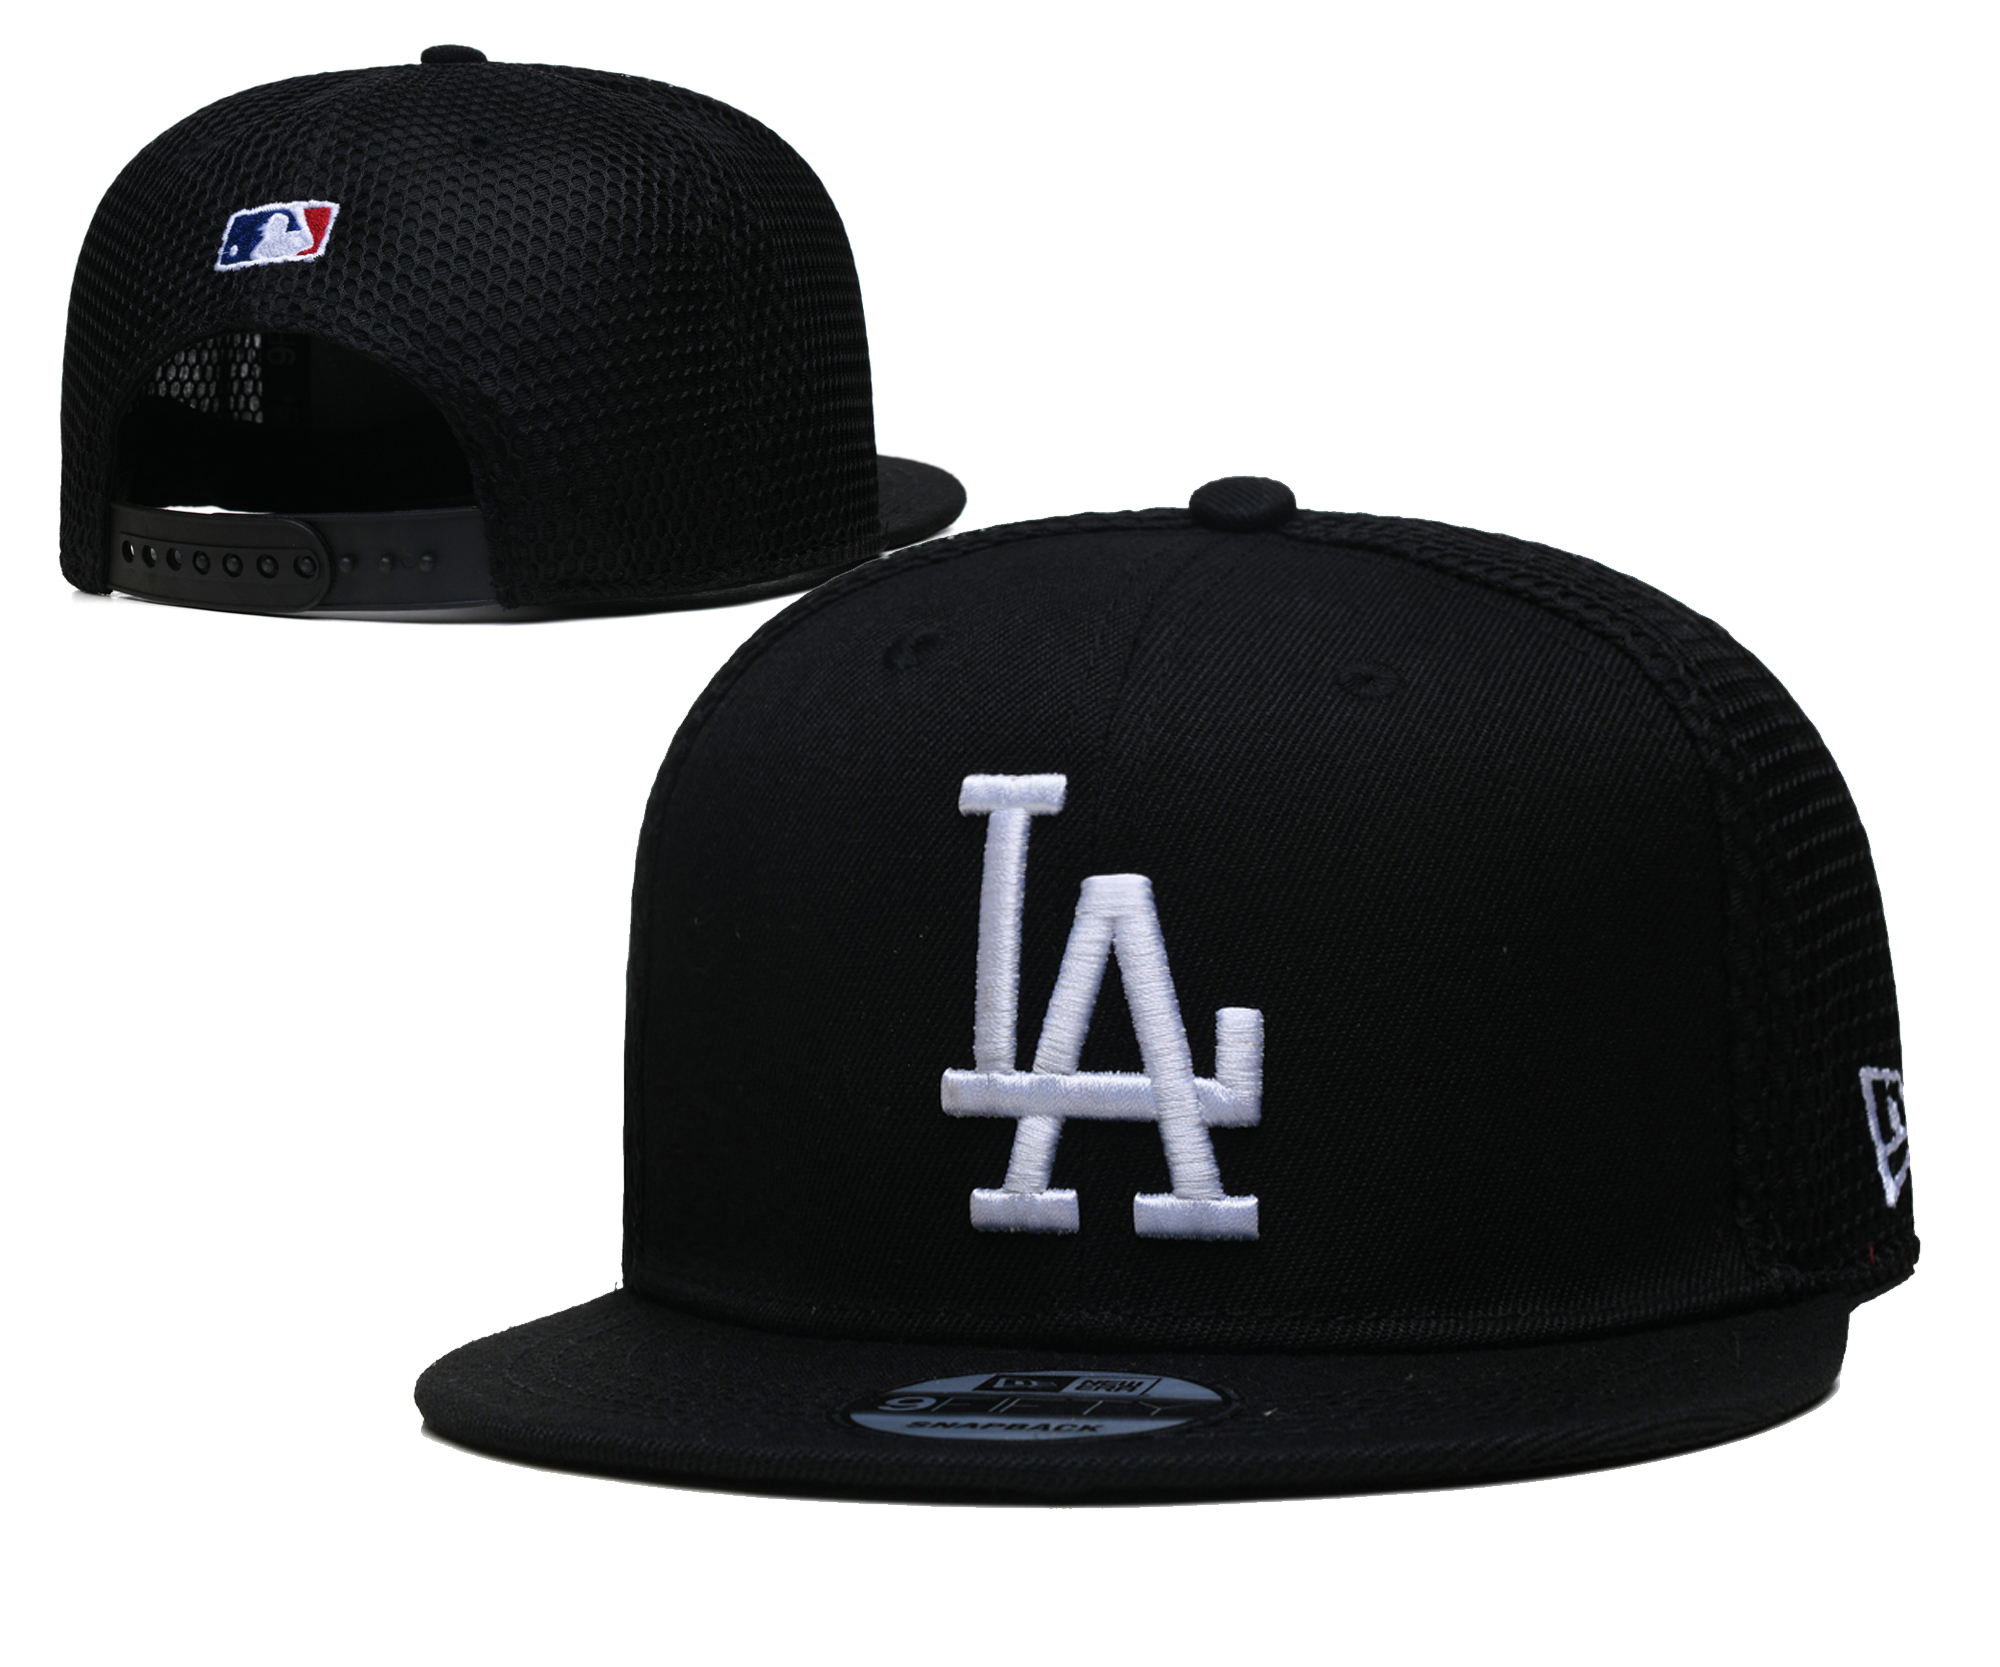 Cheap 2021 MLB Los Angeles Dodgers 29 TX hat